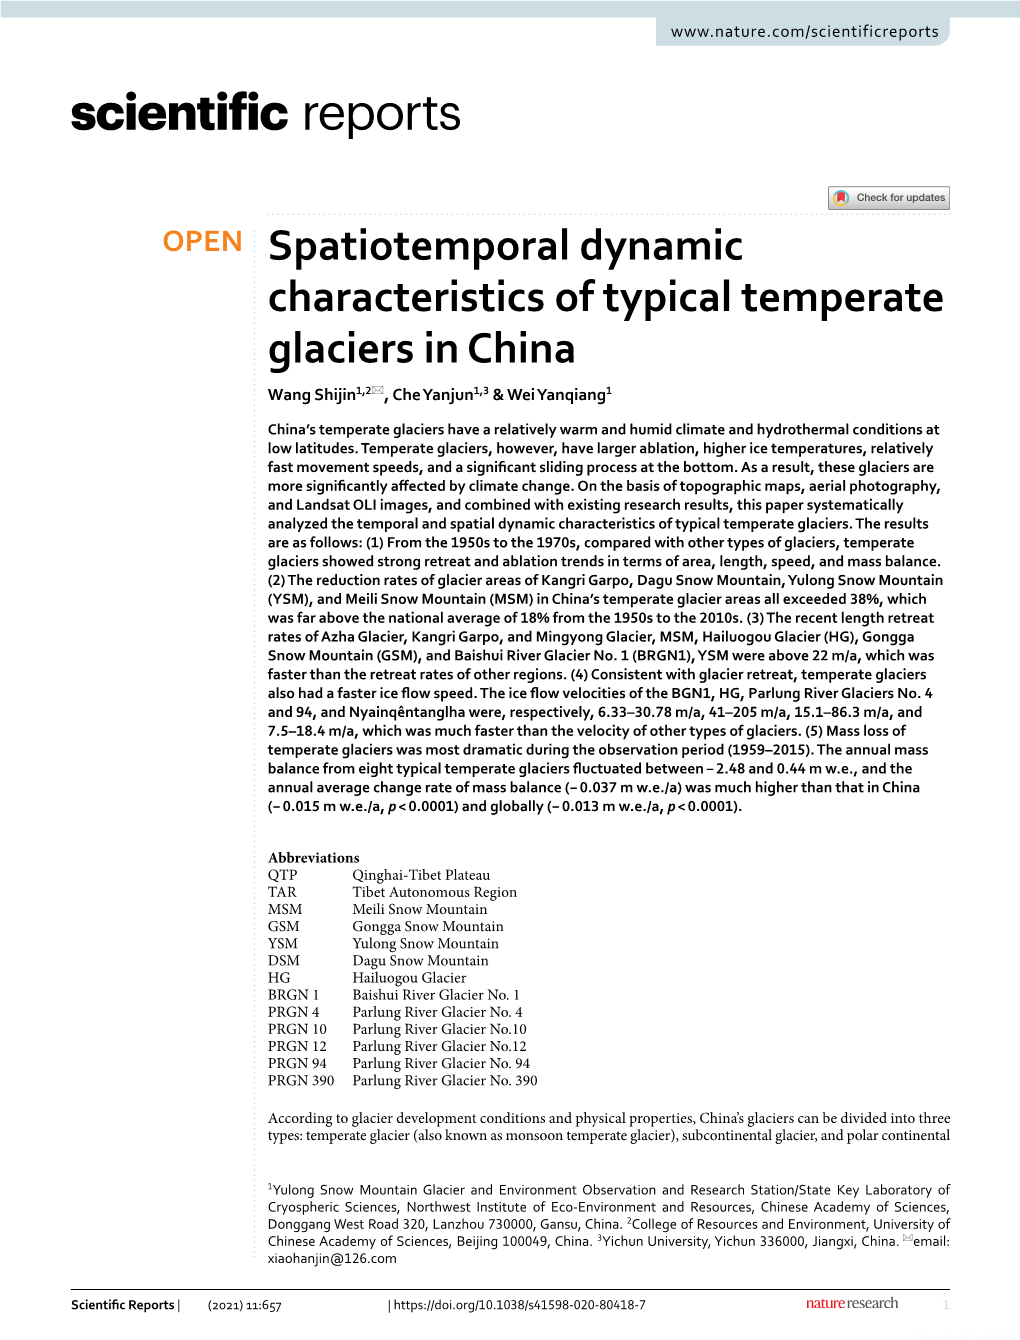 Spatiotemporal Dynamic Characteristics of Typical Temperate Glaciers in China Wang Shijin1,2*, Che Yanjun1,3 & Wei Yanqiang1